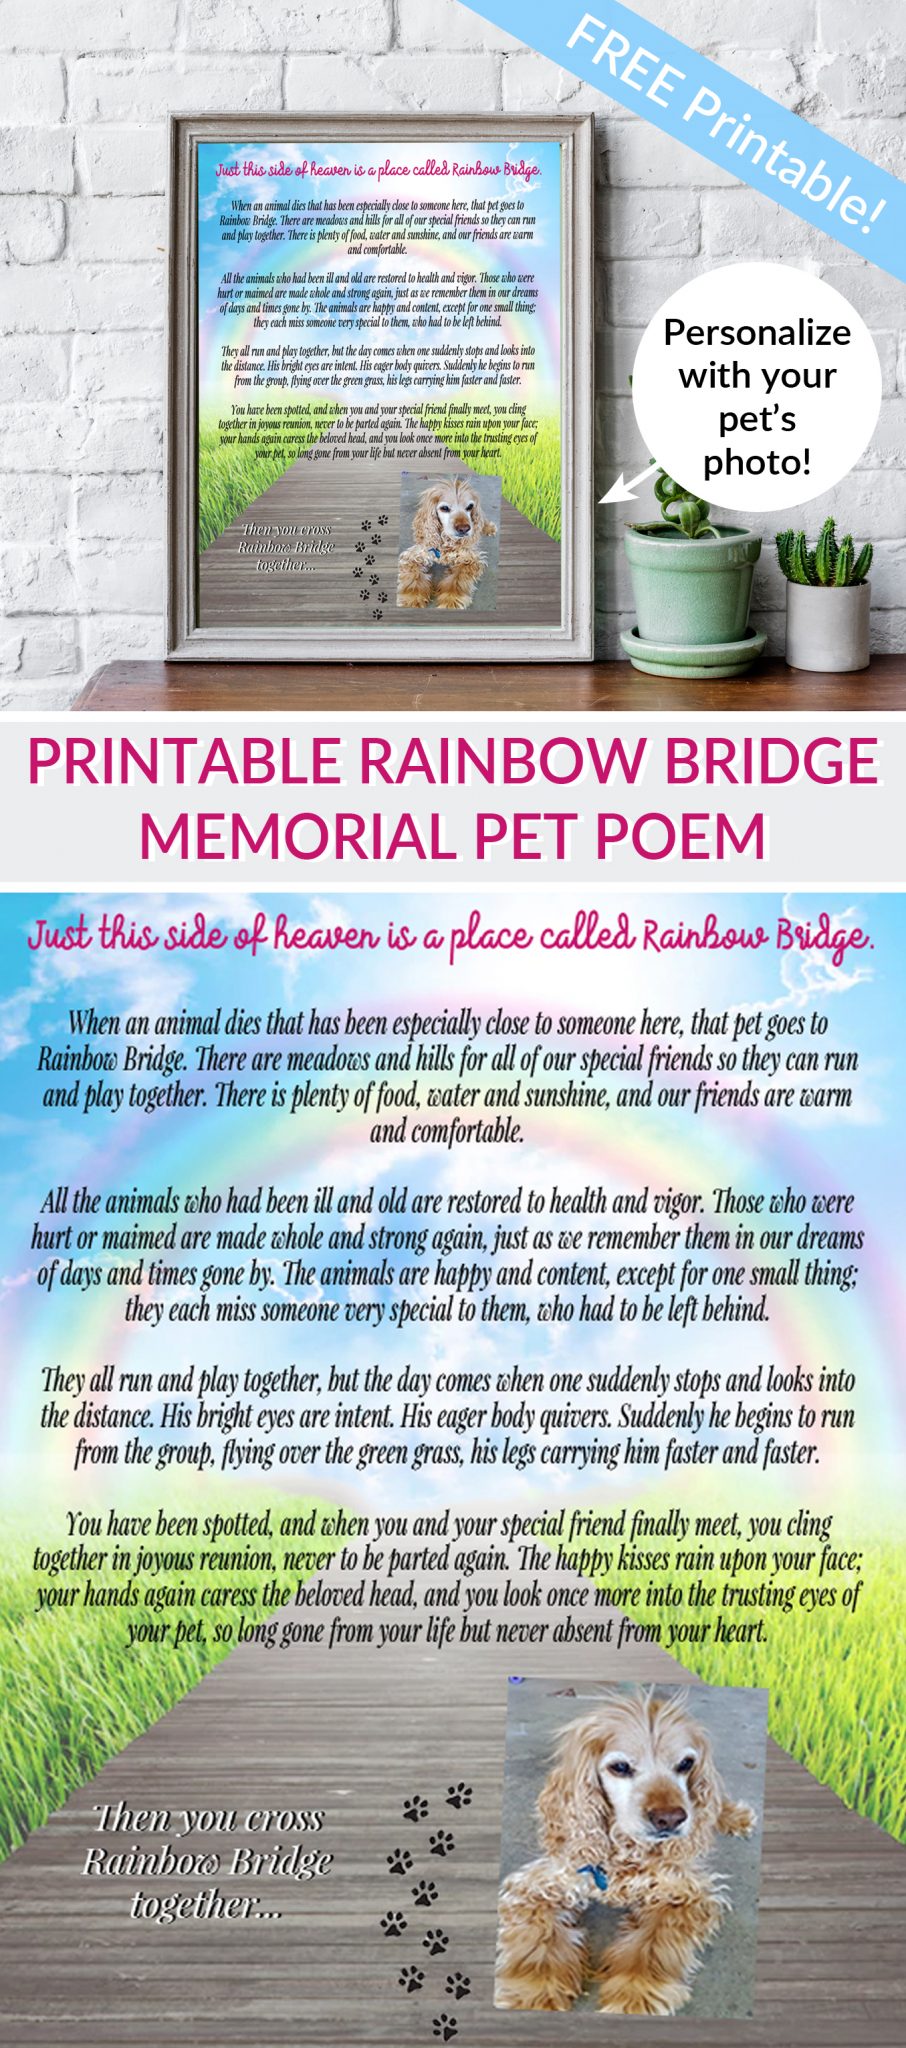 Printable Rainbow Bridge Memorial Pet Poem - For the Love of Food